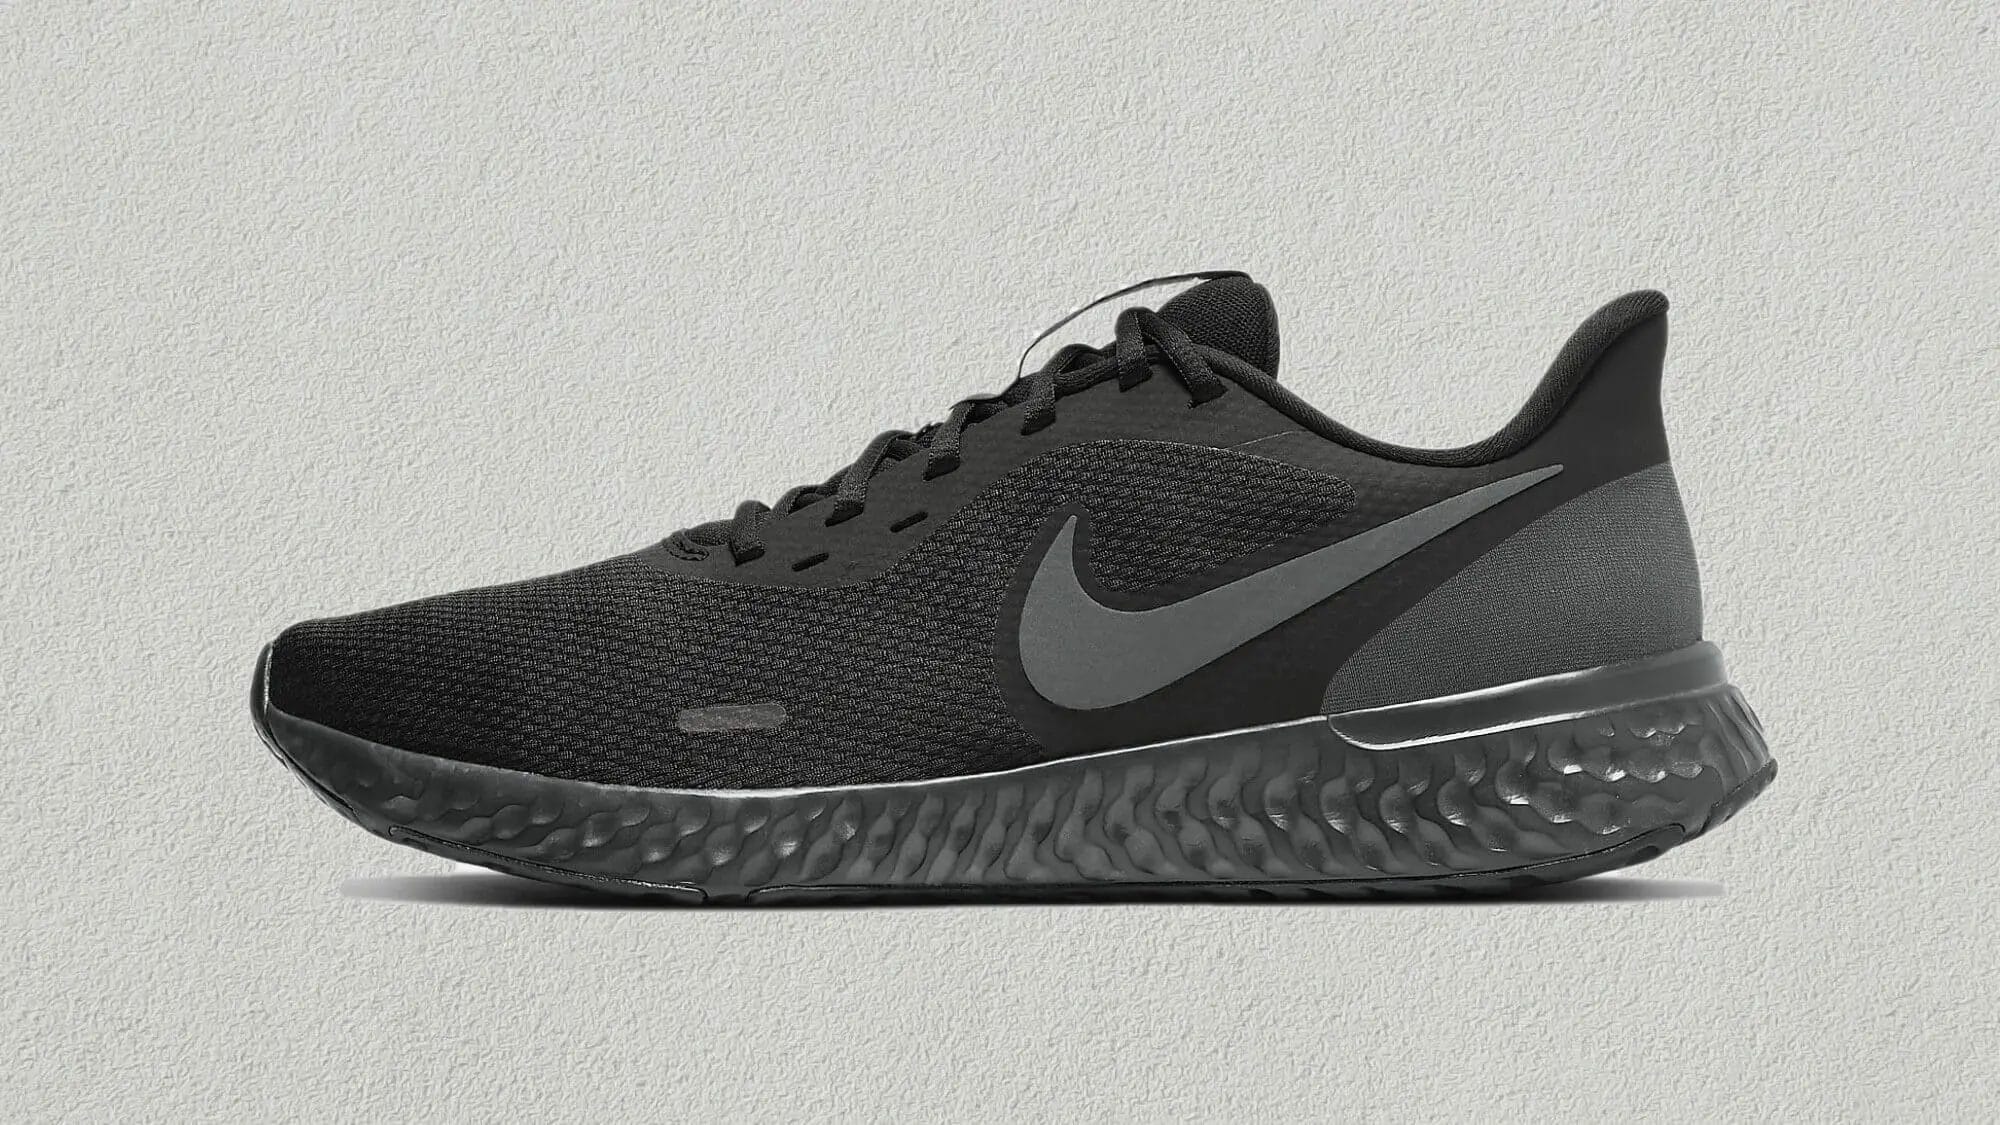 All black Nike Revolution 5 running shoe in profile